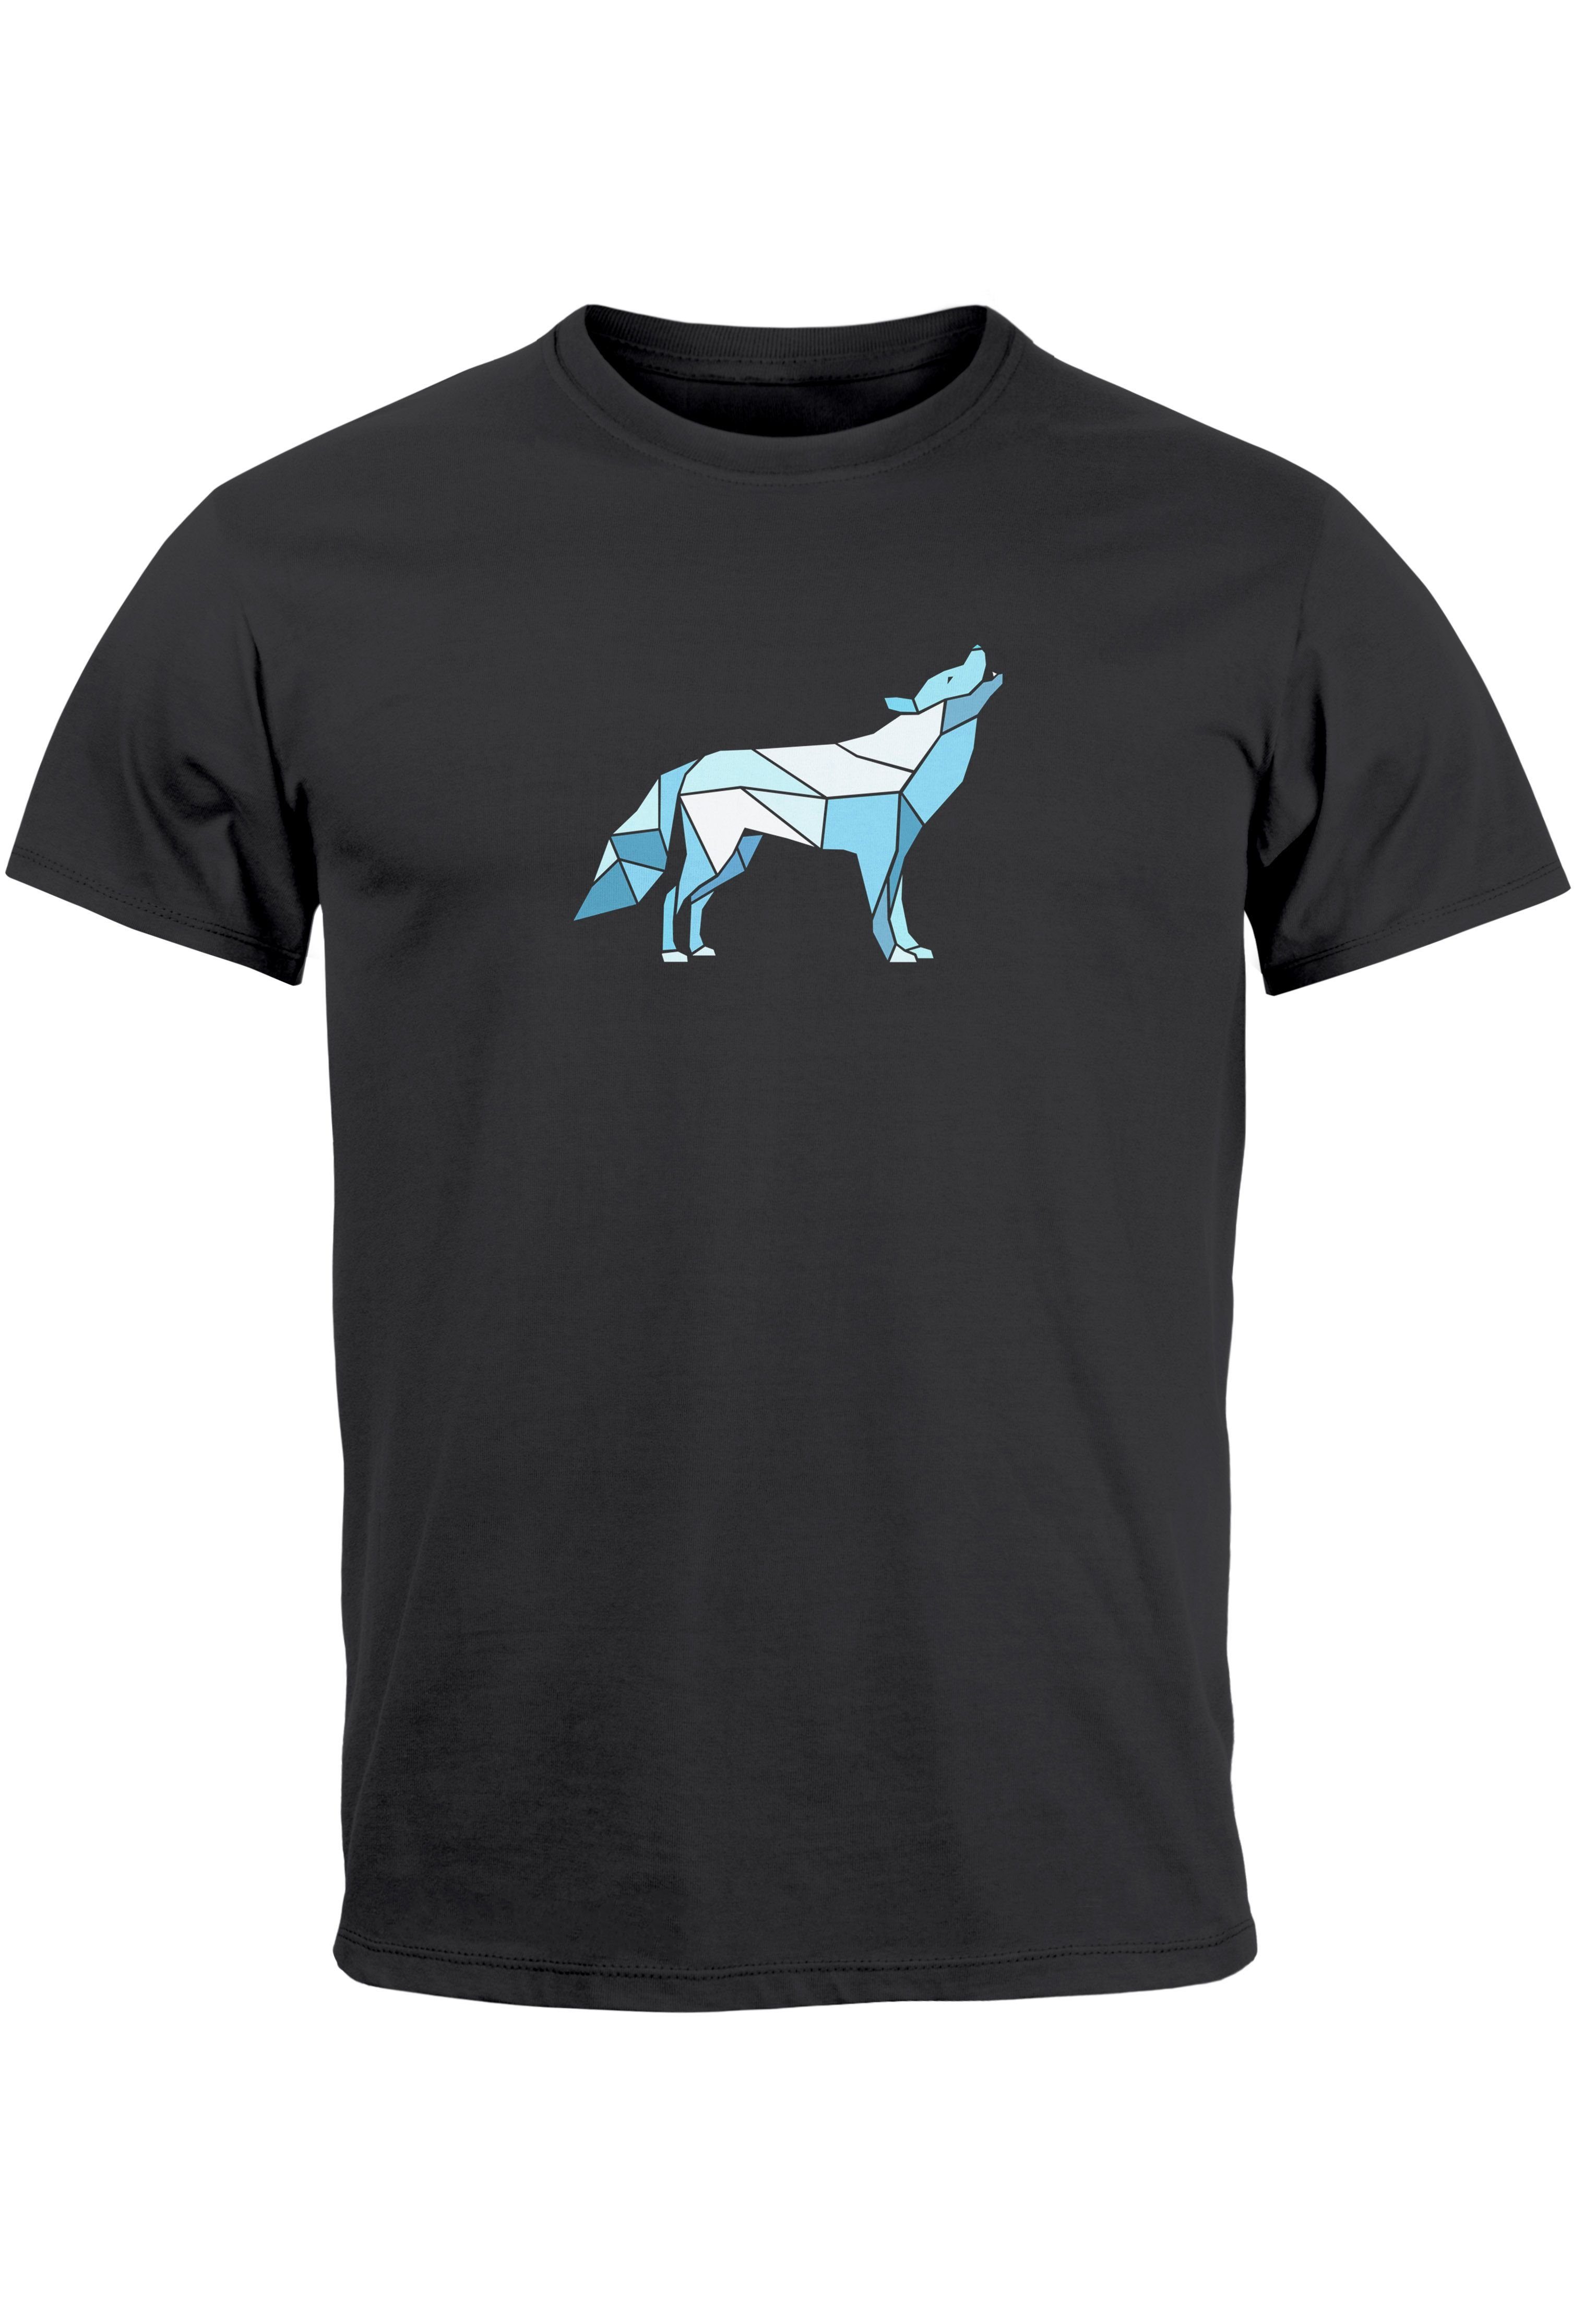 Neverless Print-Shirt Herren T-Shirt Bedruckt Polygon Grafik Wolf Outdoor Fashion Tiermotiv mit Print anthrazit